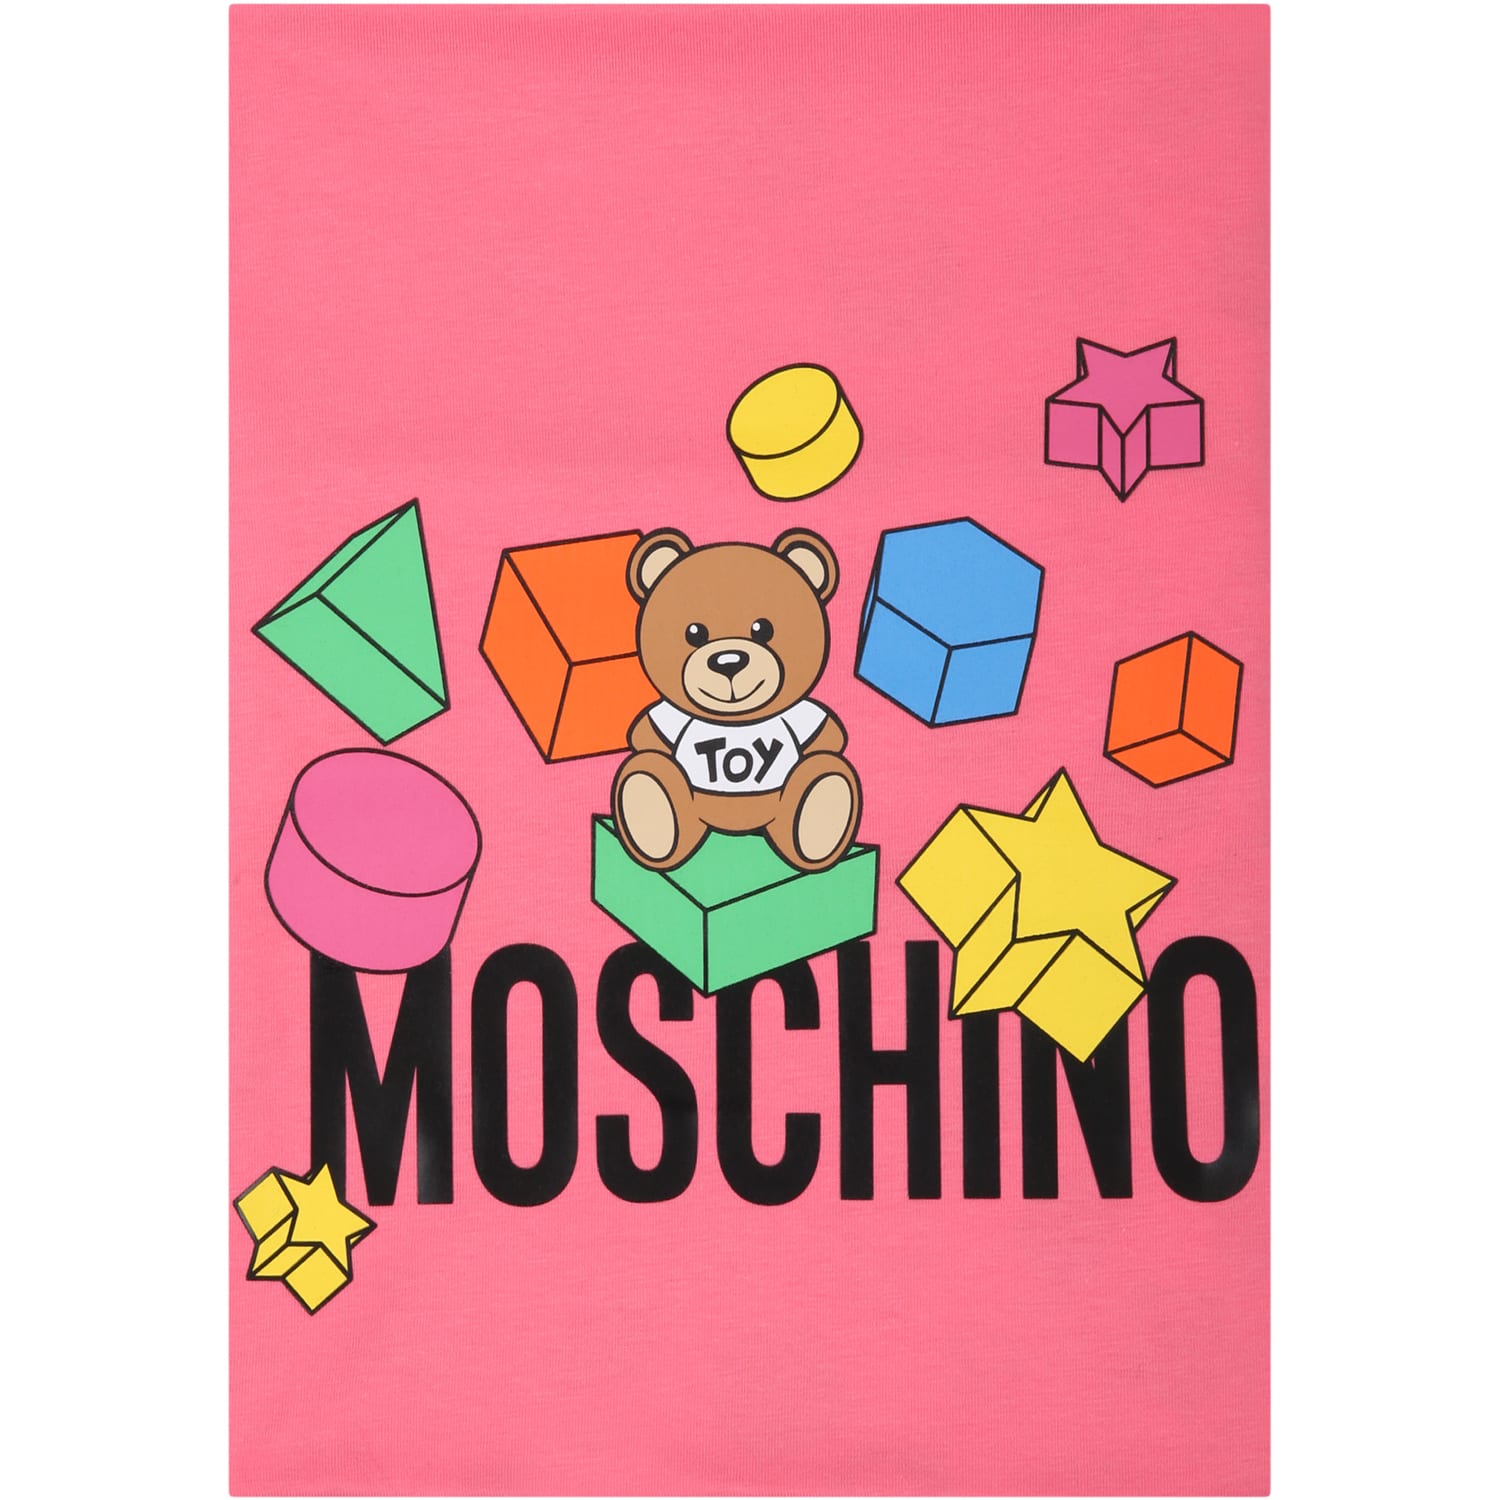 Moschino Fuchsia Blanket For Babygirl With Teddy Bears